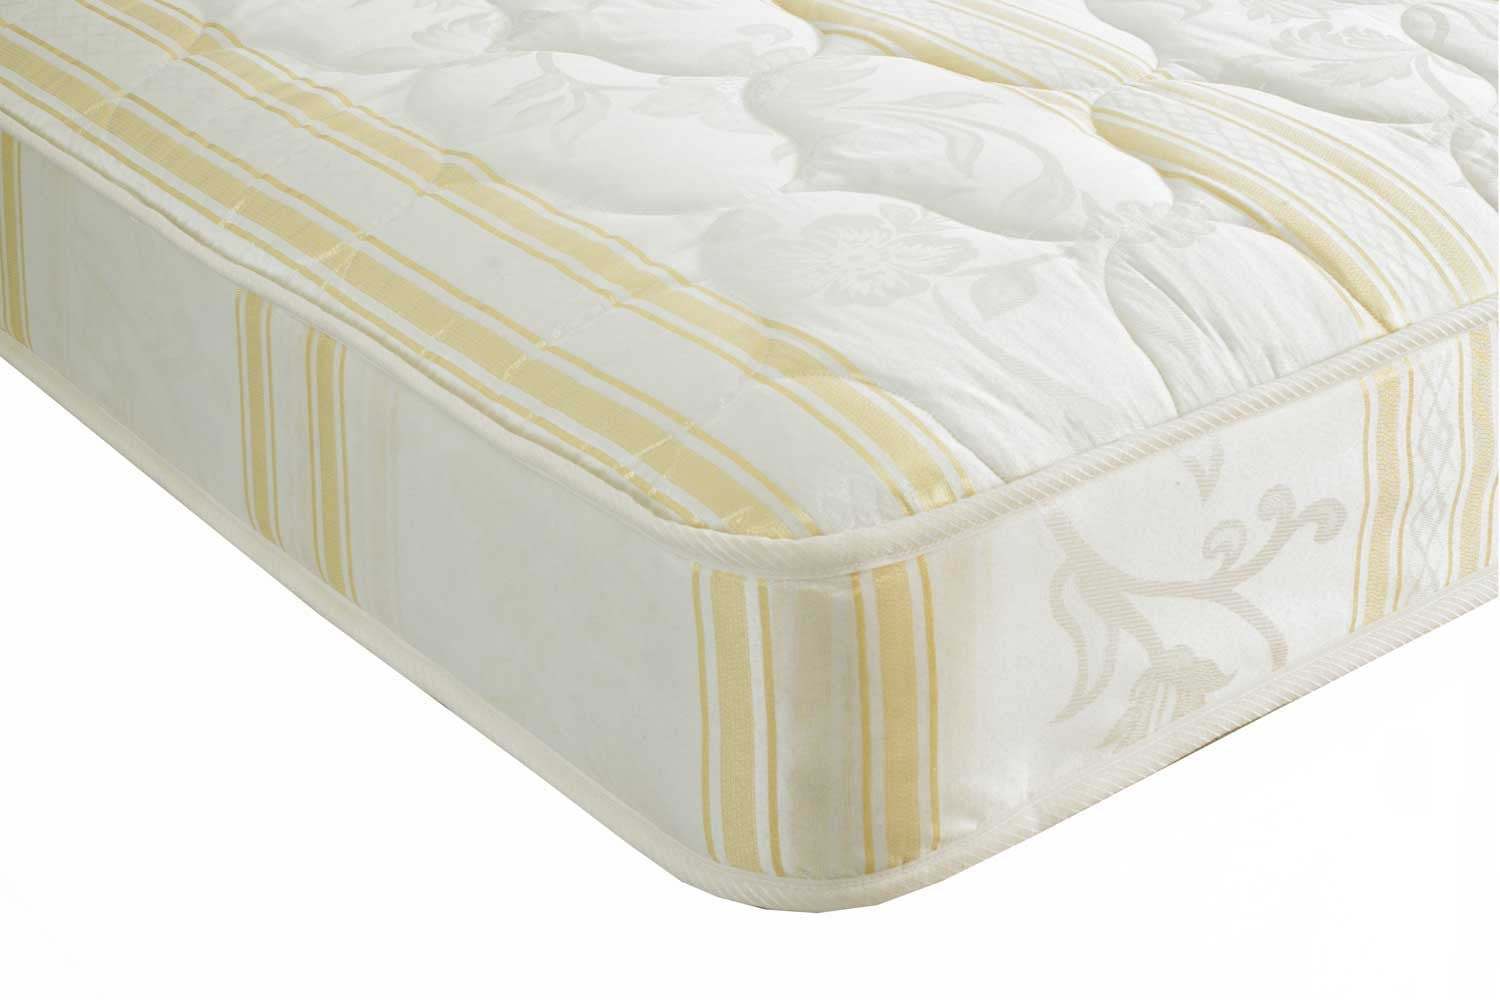 crown kingdom medium mattress review